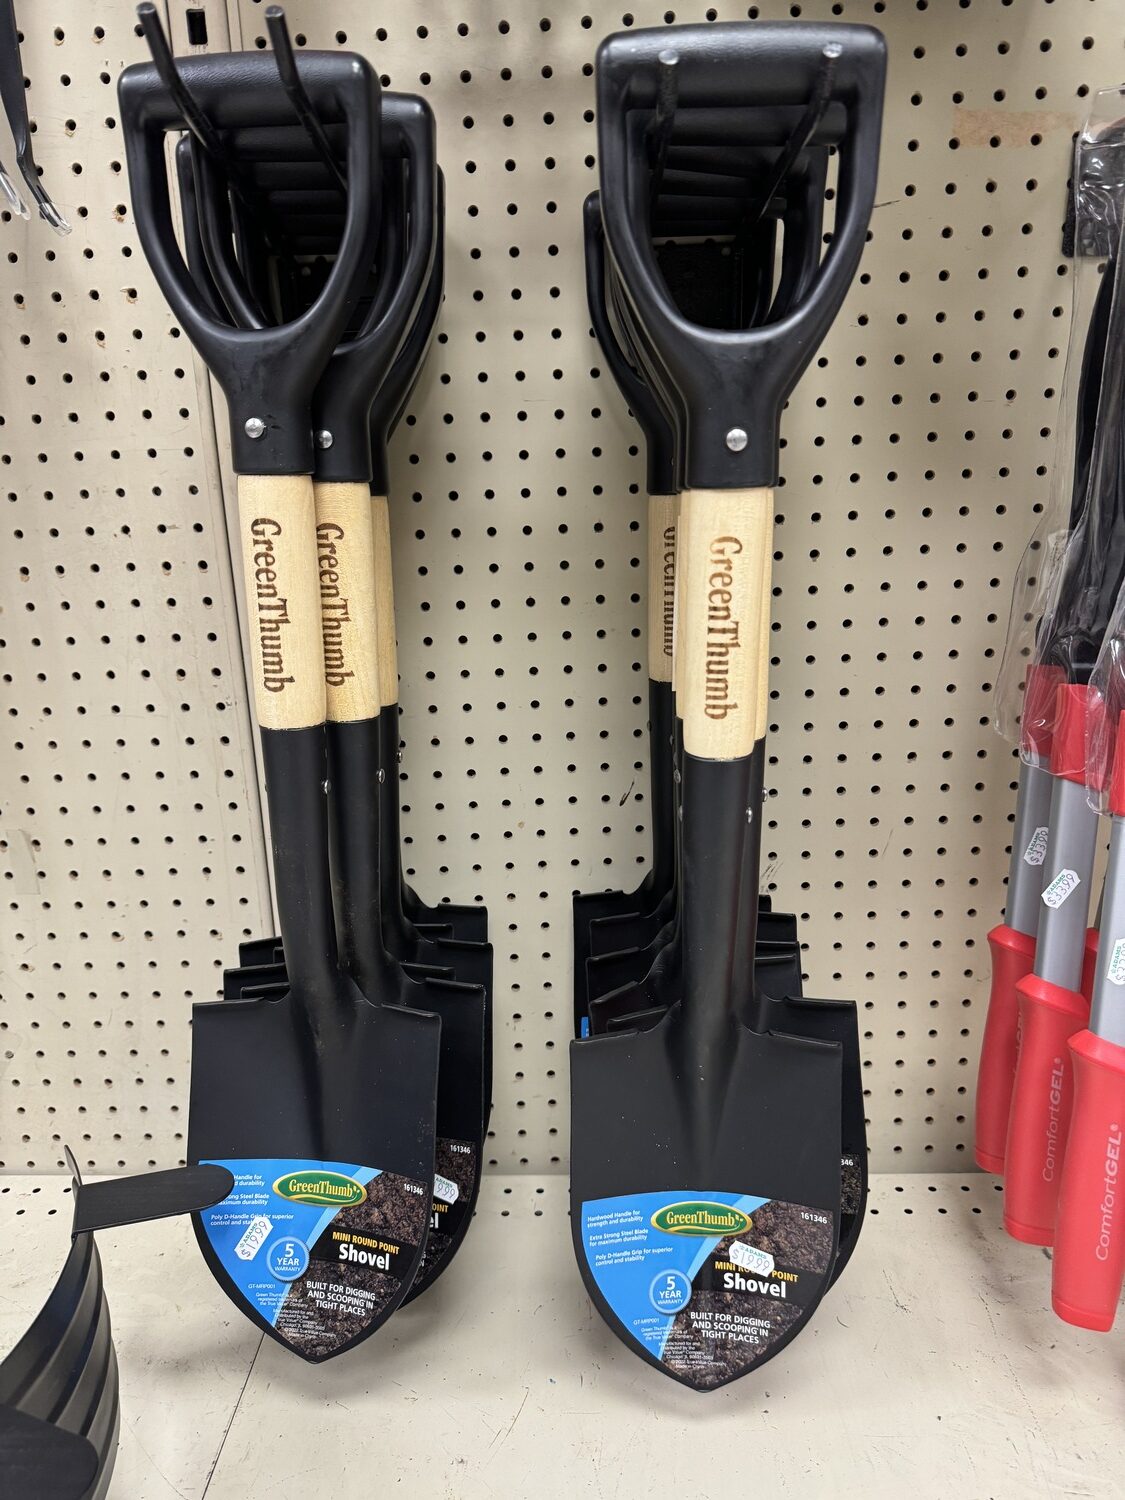 Not specifically intended for children, this “mini shovel,